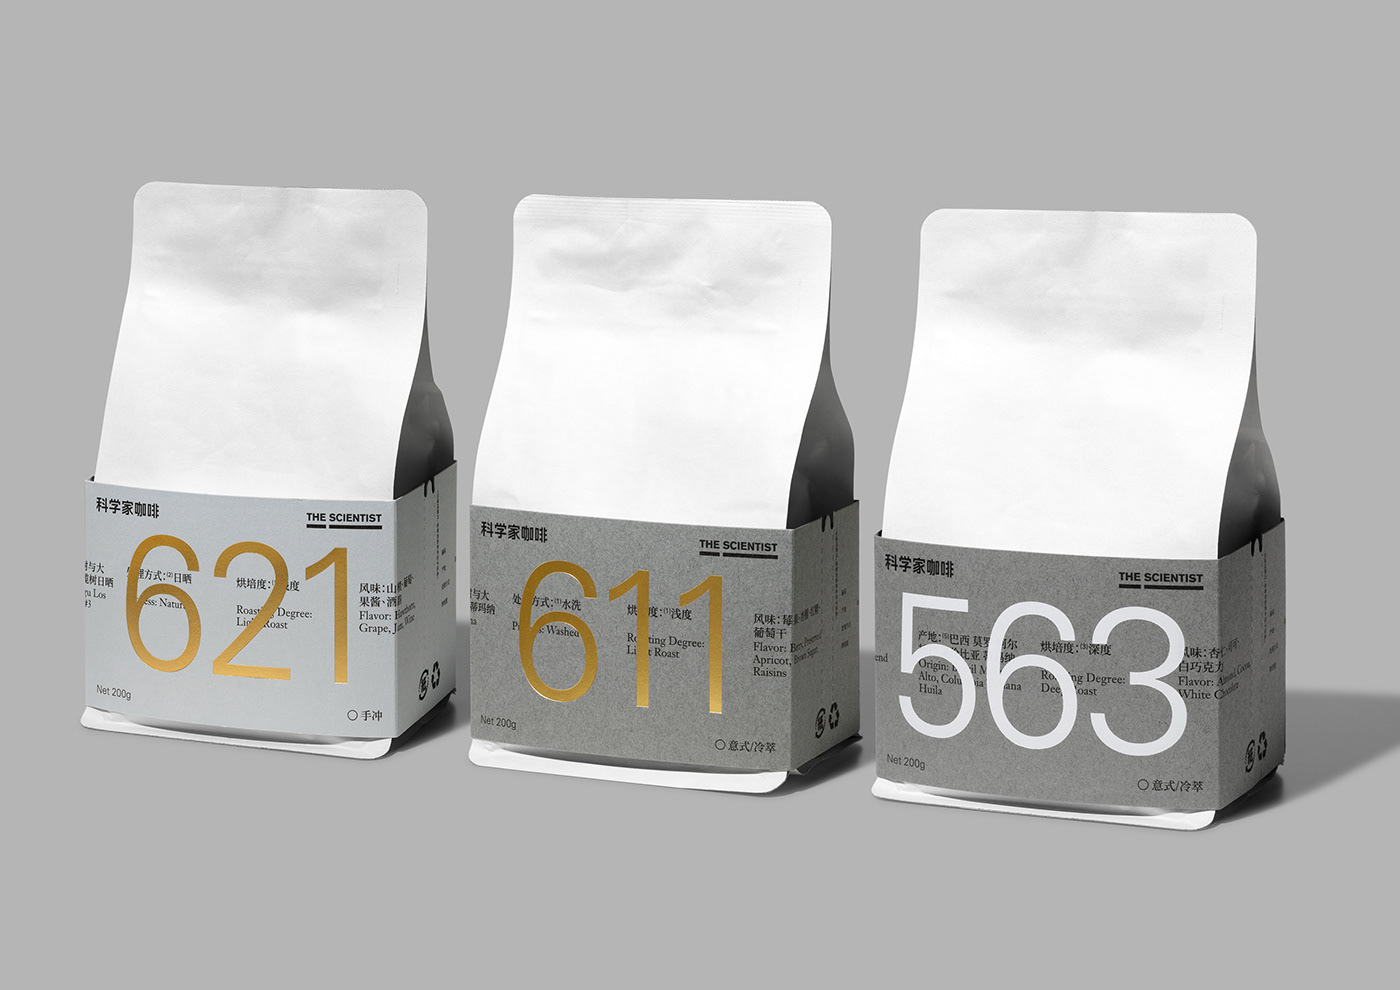 Packaging example #394: T.S's Coffee Bean Packaging ????????